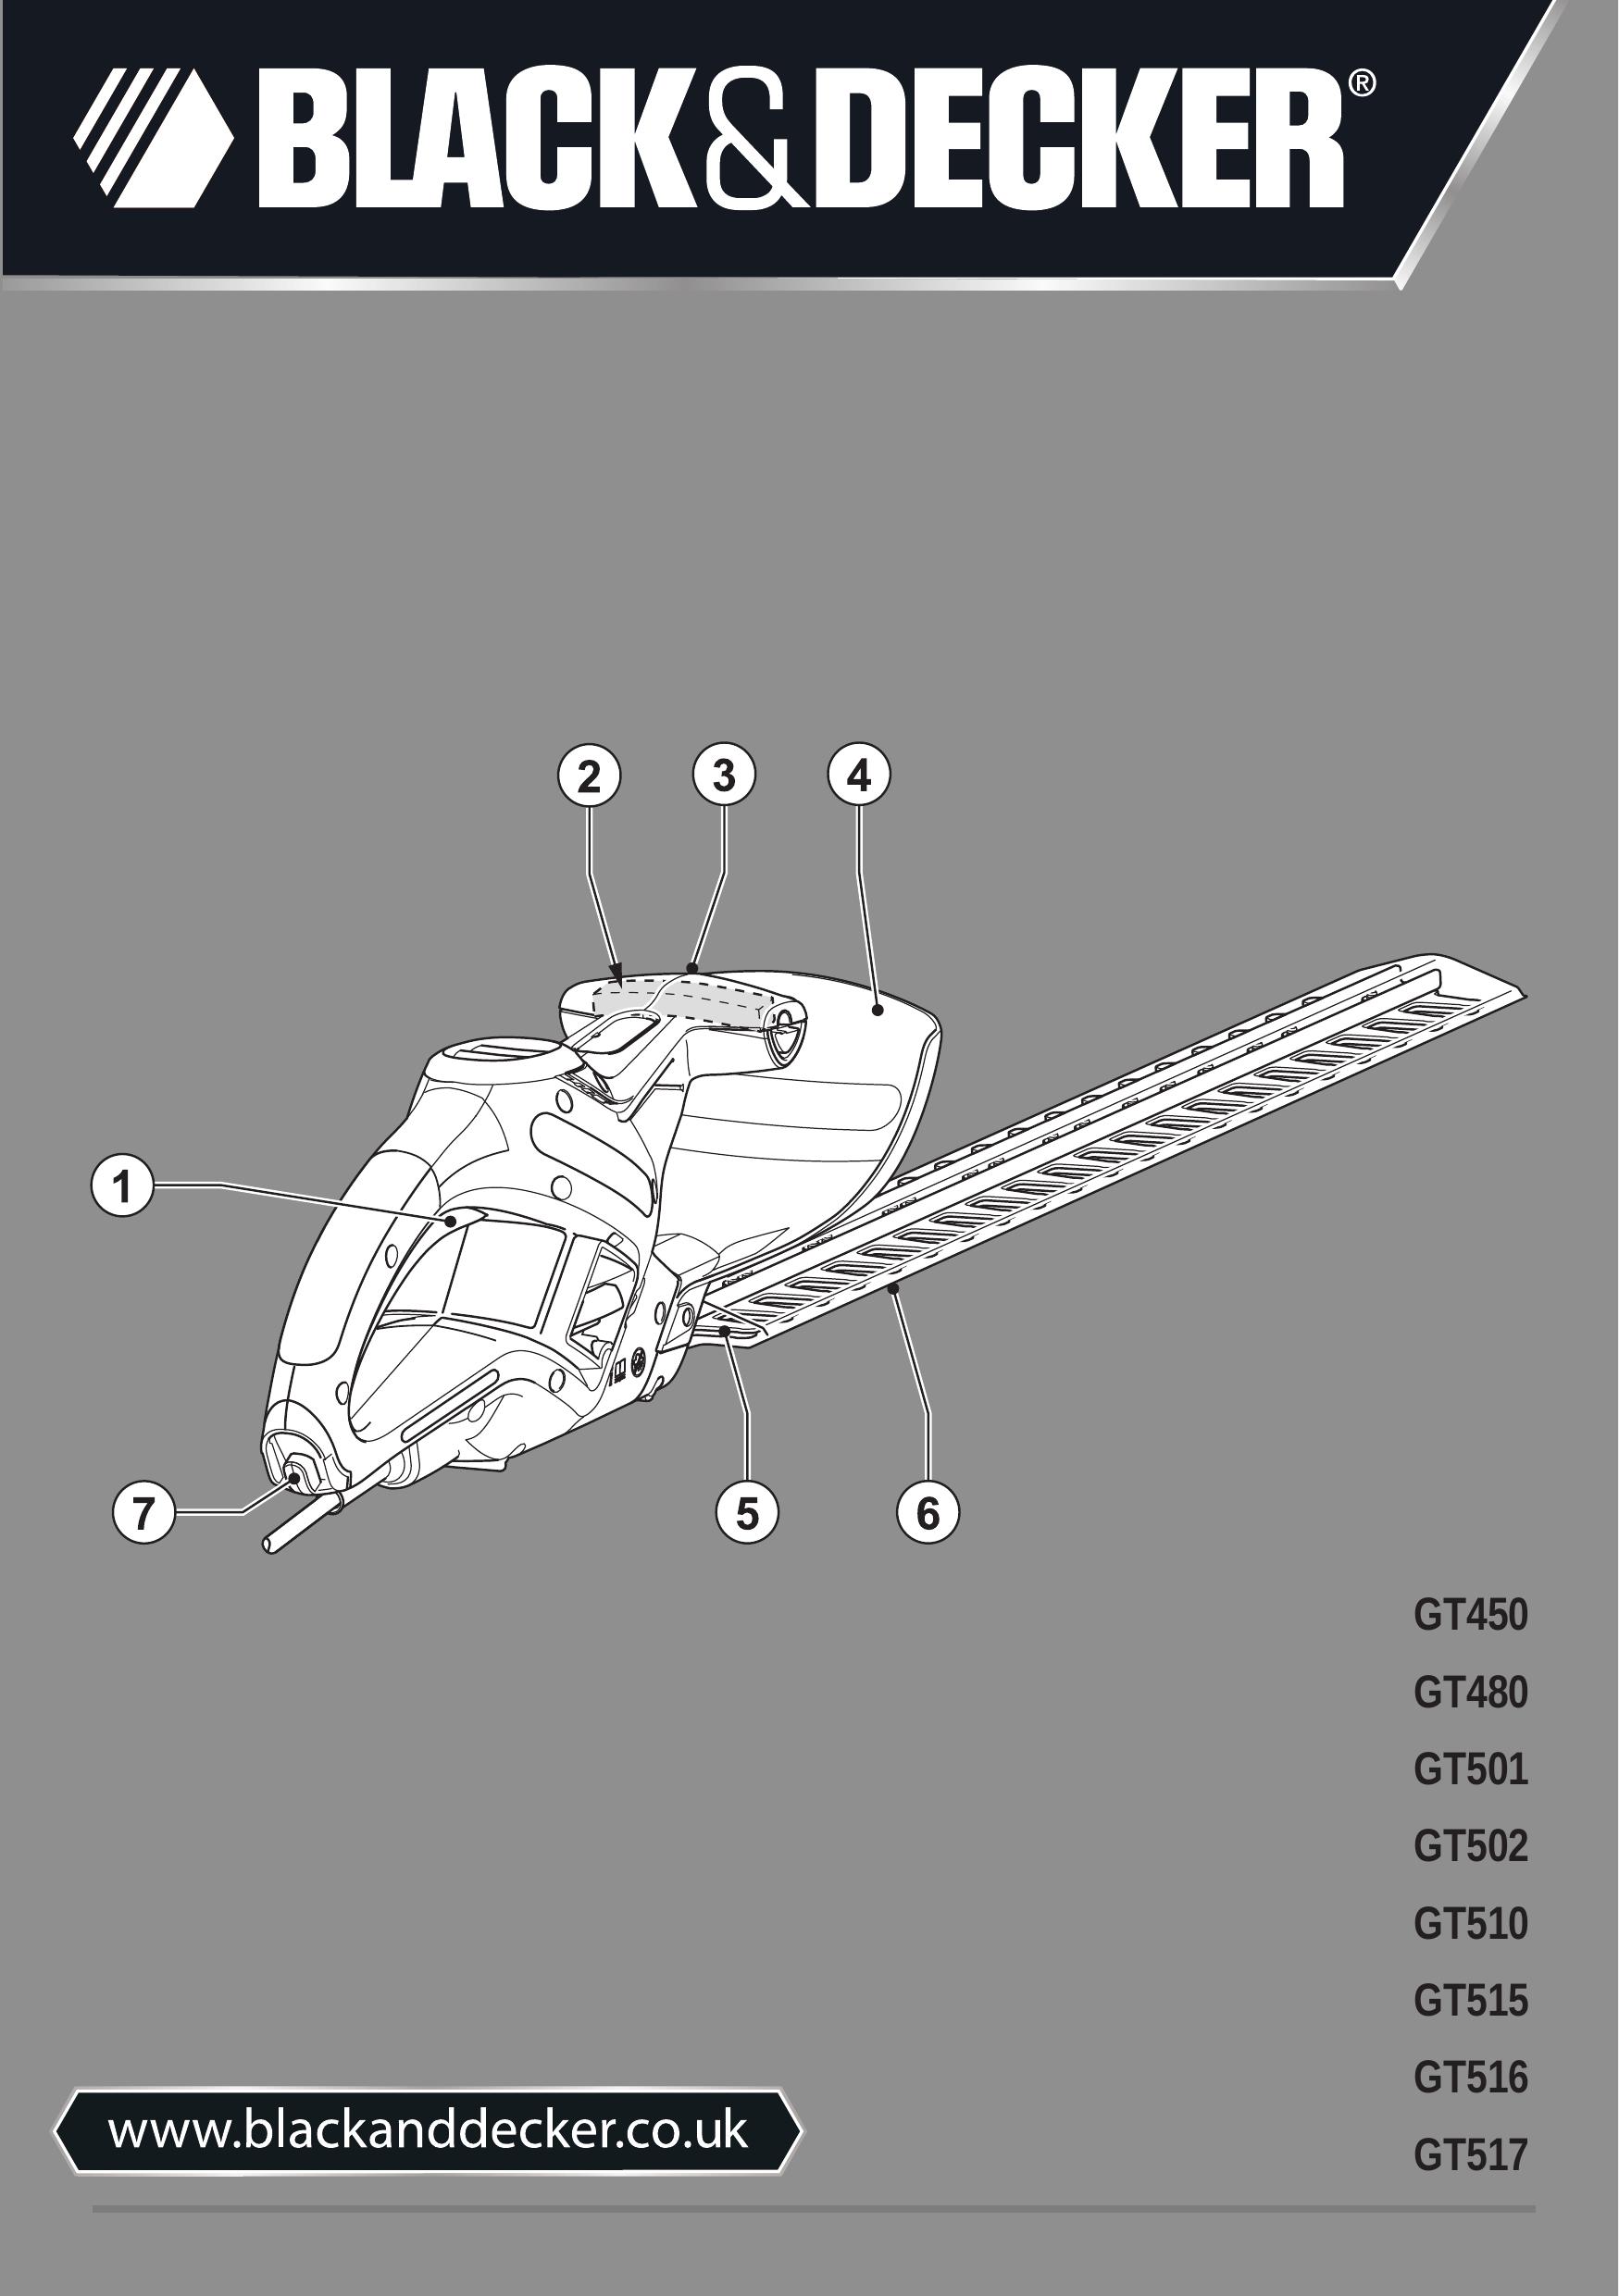 Black & Decker GT450 Edger User Manual